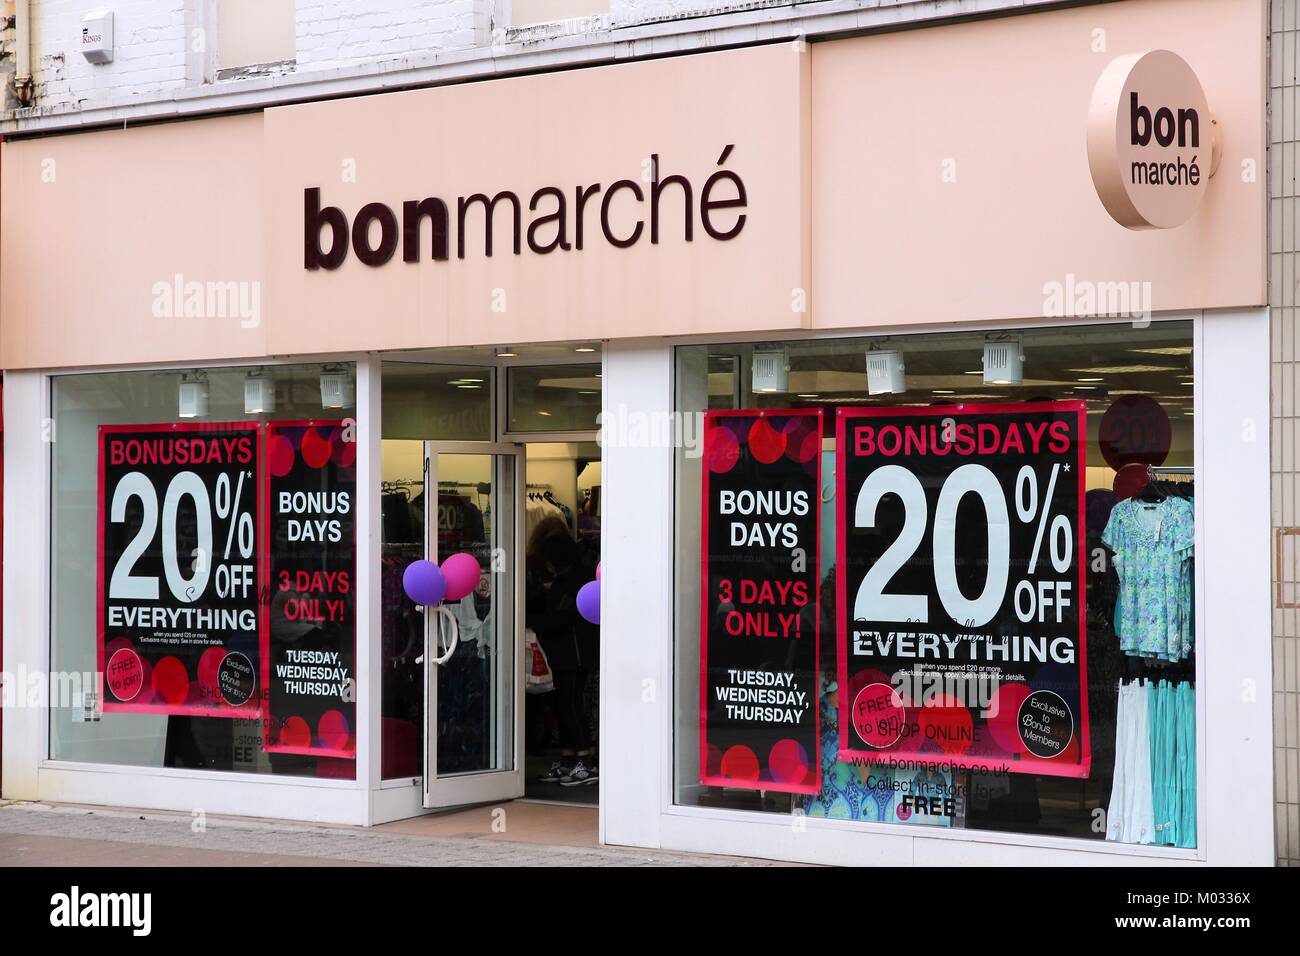 File:Bonmarche Store Front.jpg - Wikimedia Commons